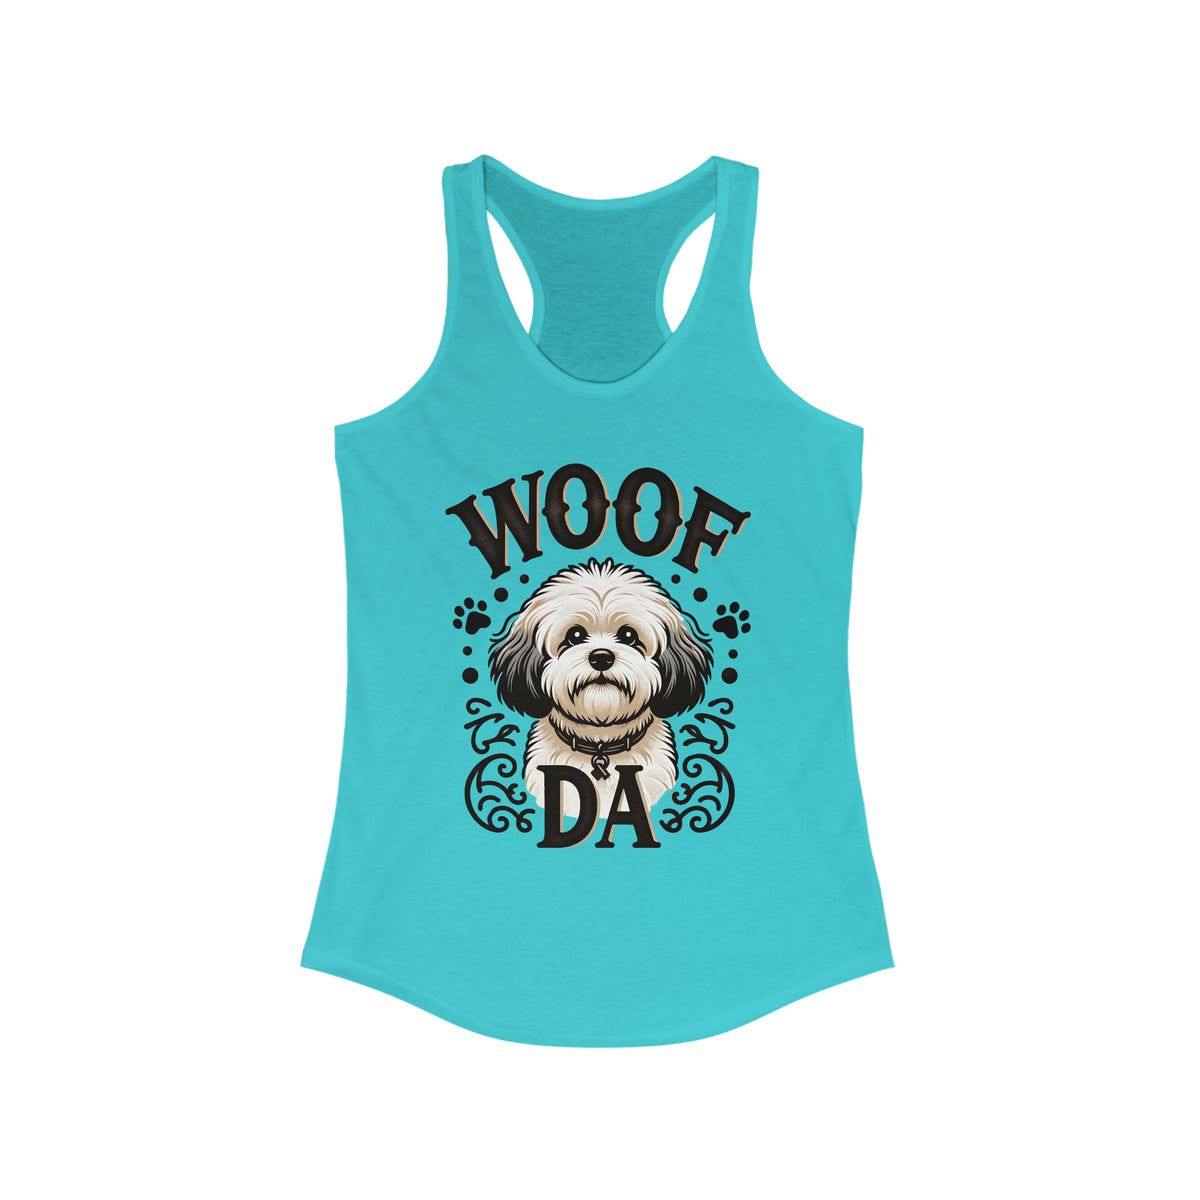 Woof Da Minnesota Dog Lover Shirt | Bichon Frisé Spaniel Mix | Uff Da Norwegian Gift | Women's Slim-fit Racerback Tank Top